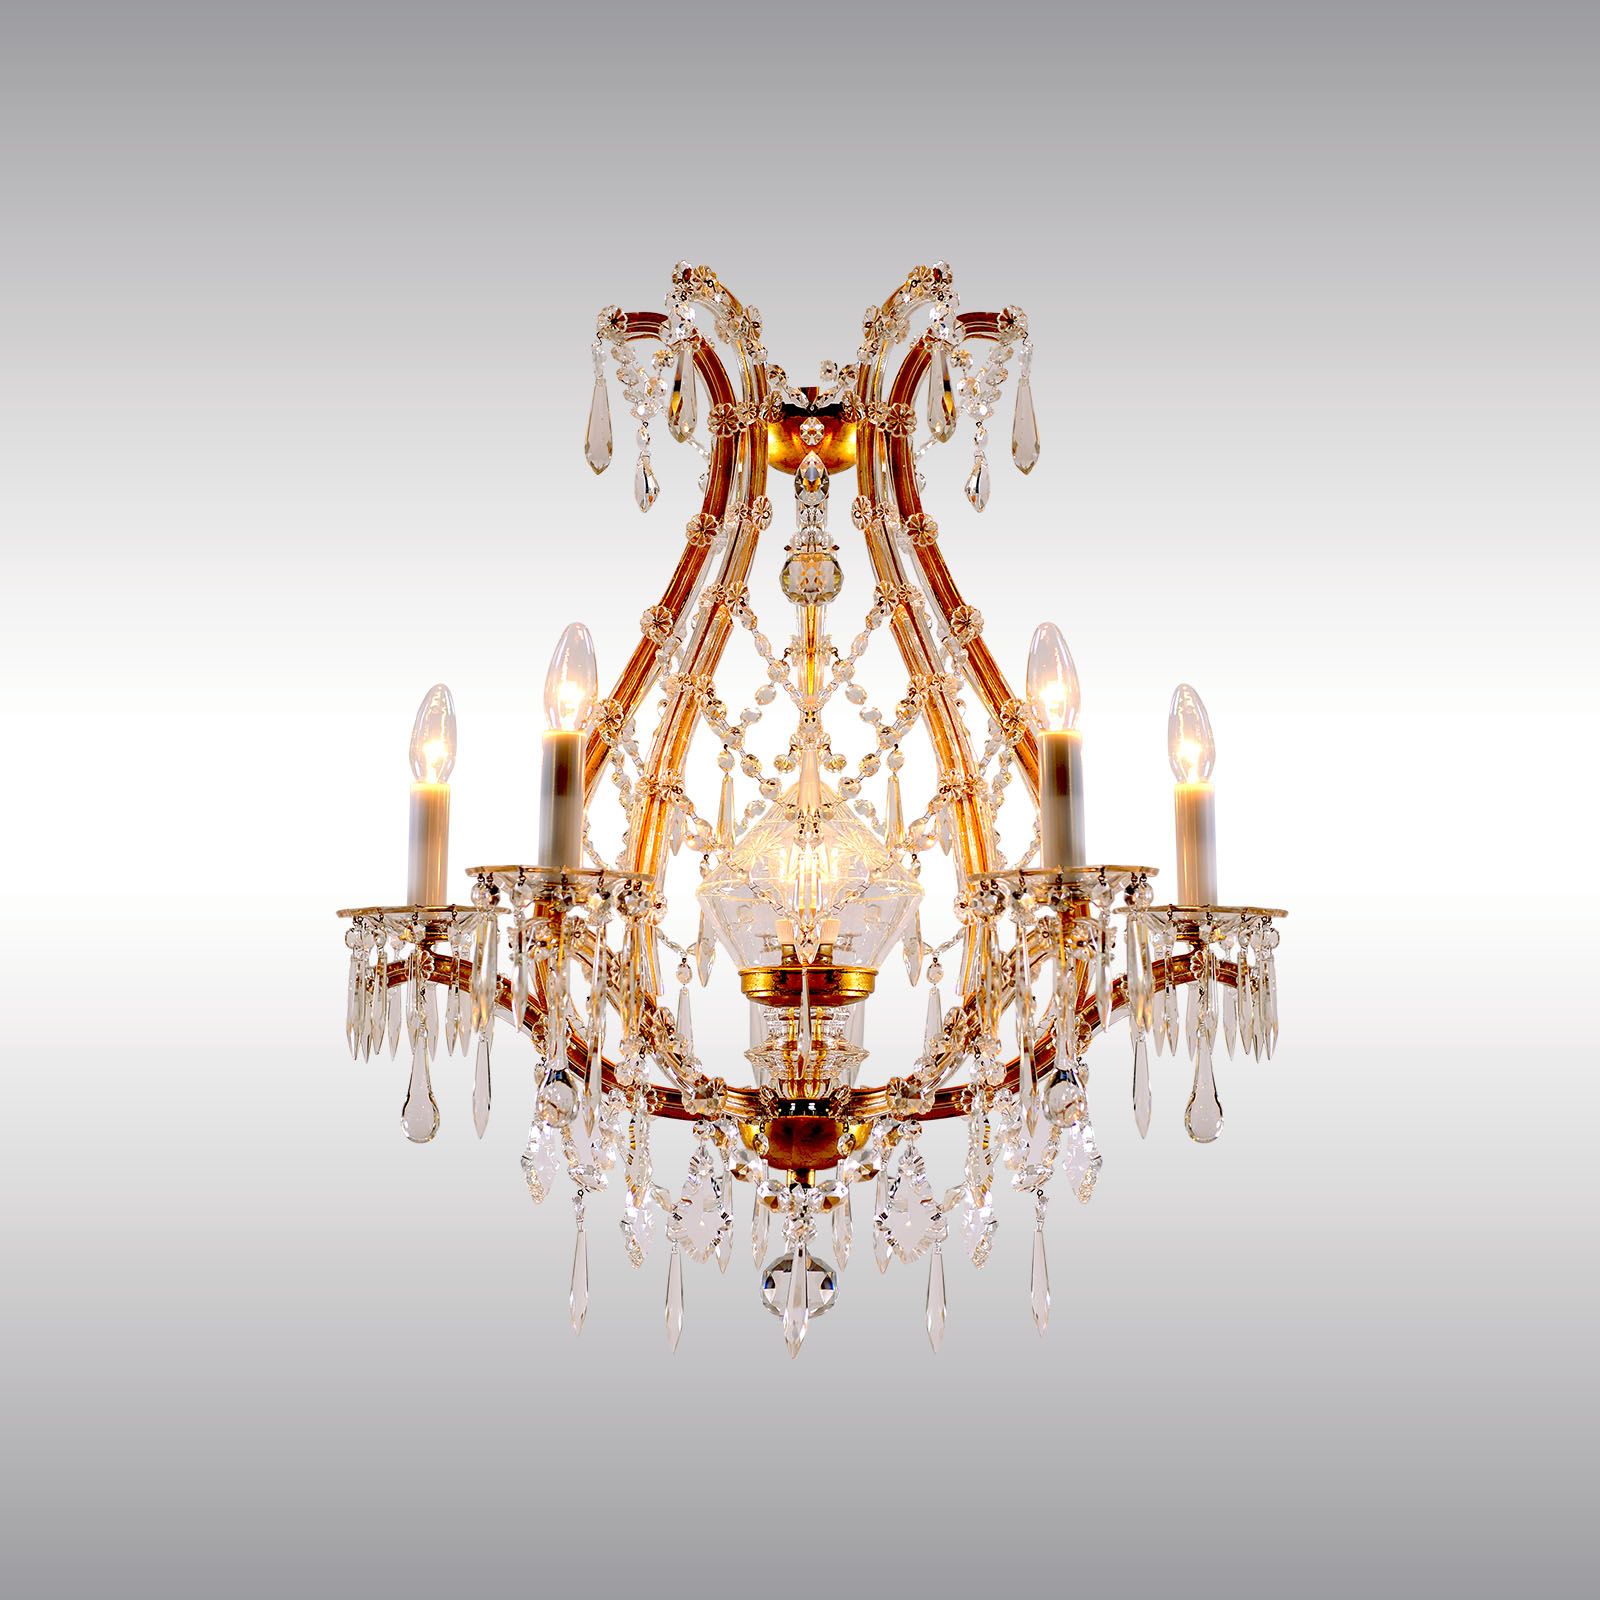 WOKA LAMPS VIENNA - OrderNr.: 80013|Salon Luster - Design: Maria Theresien Stil